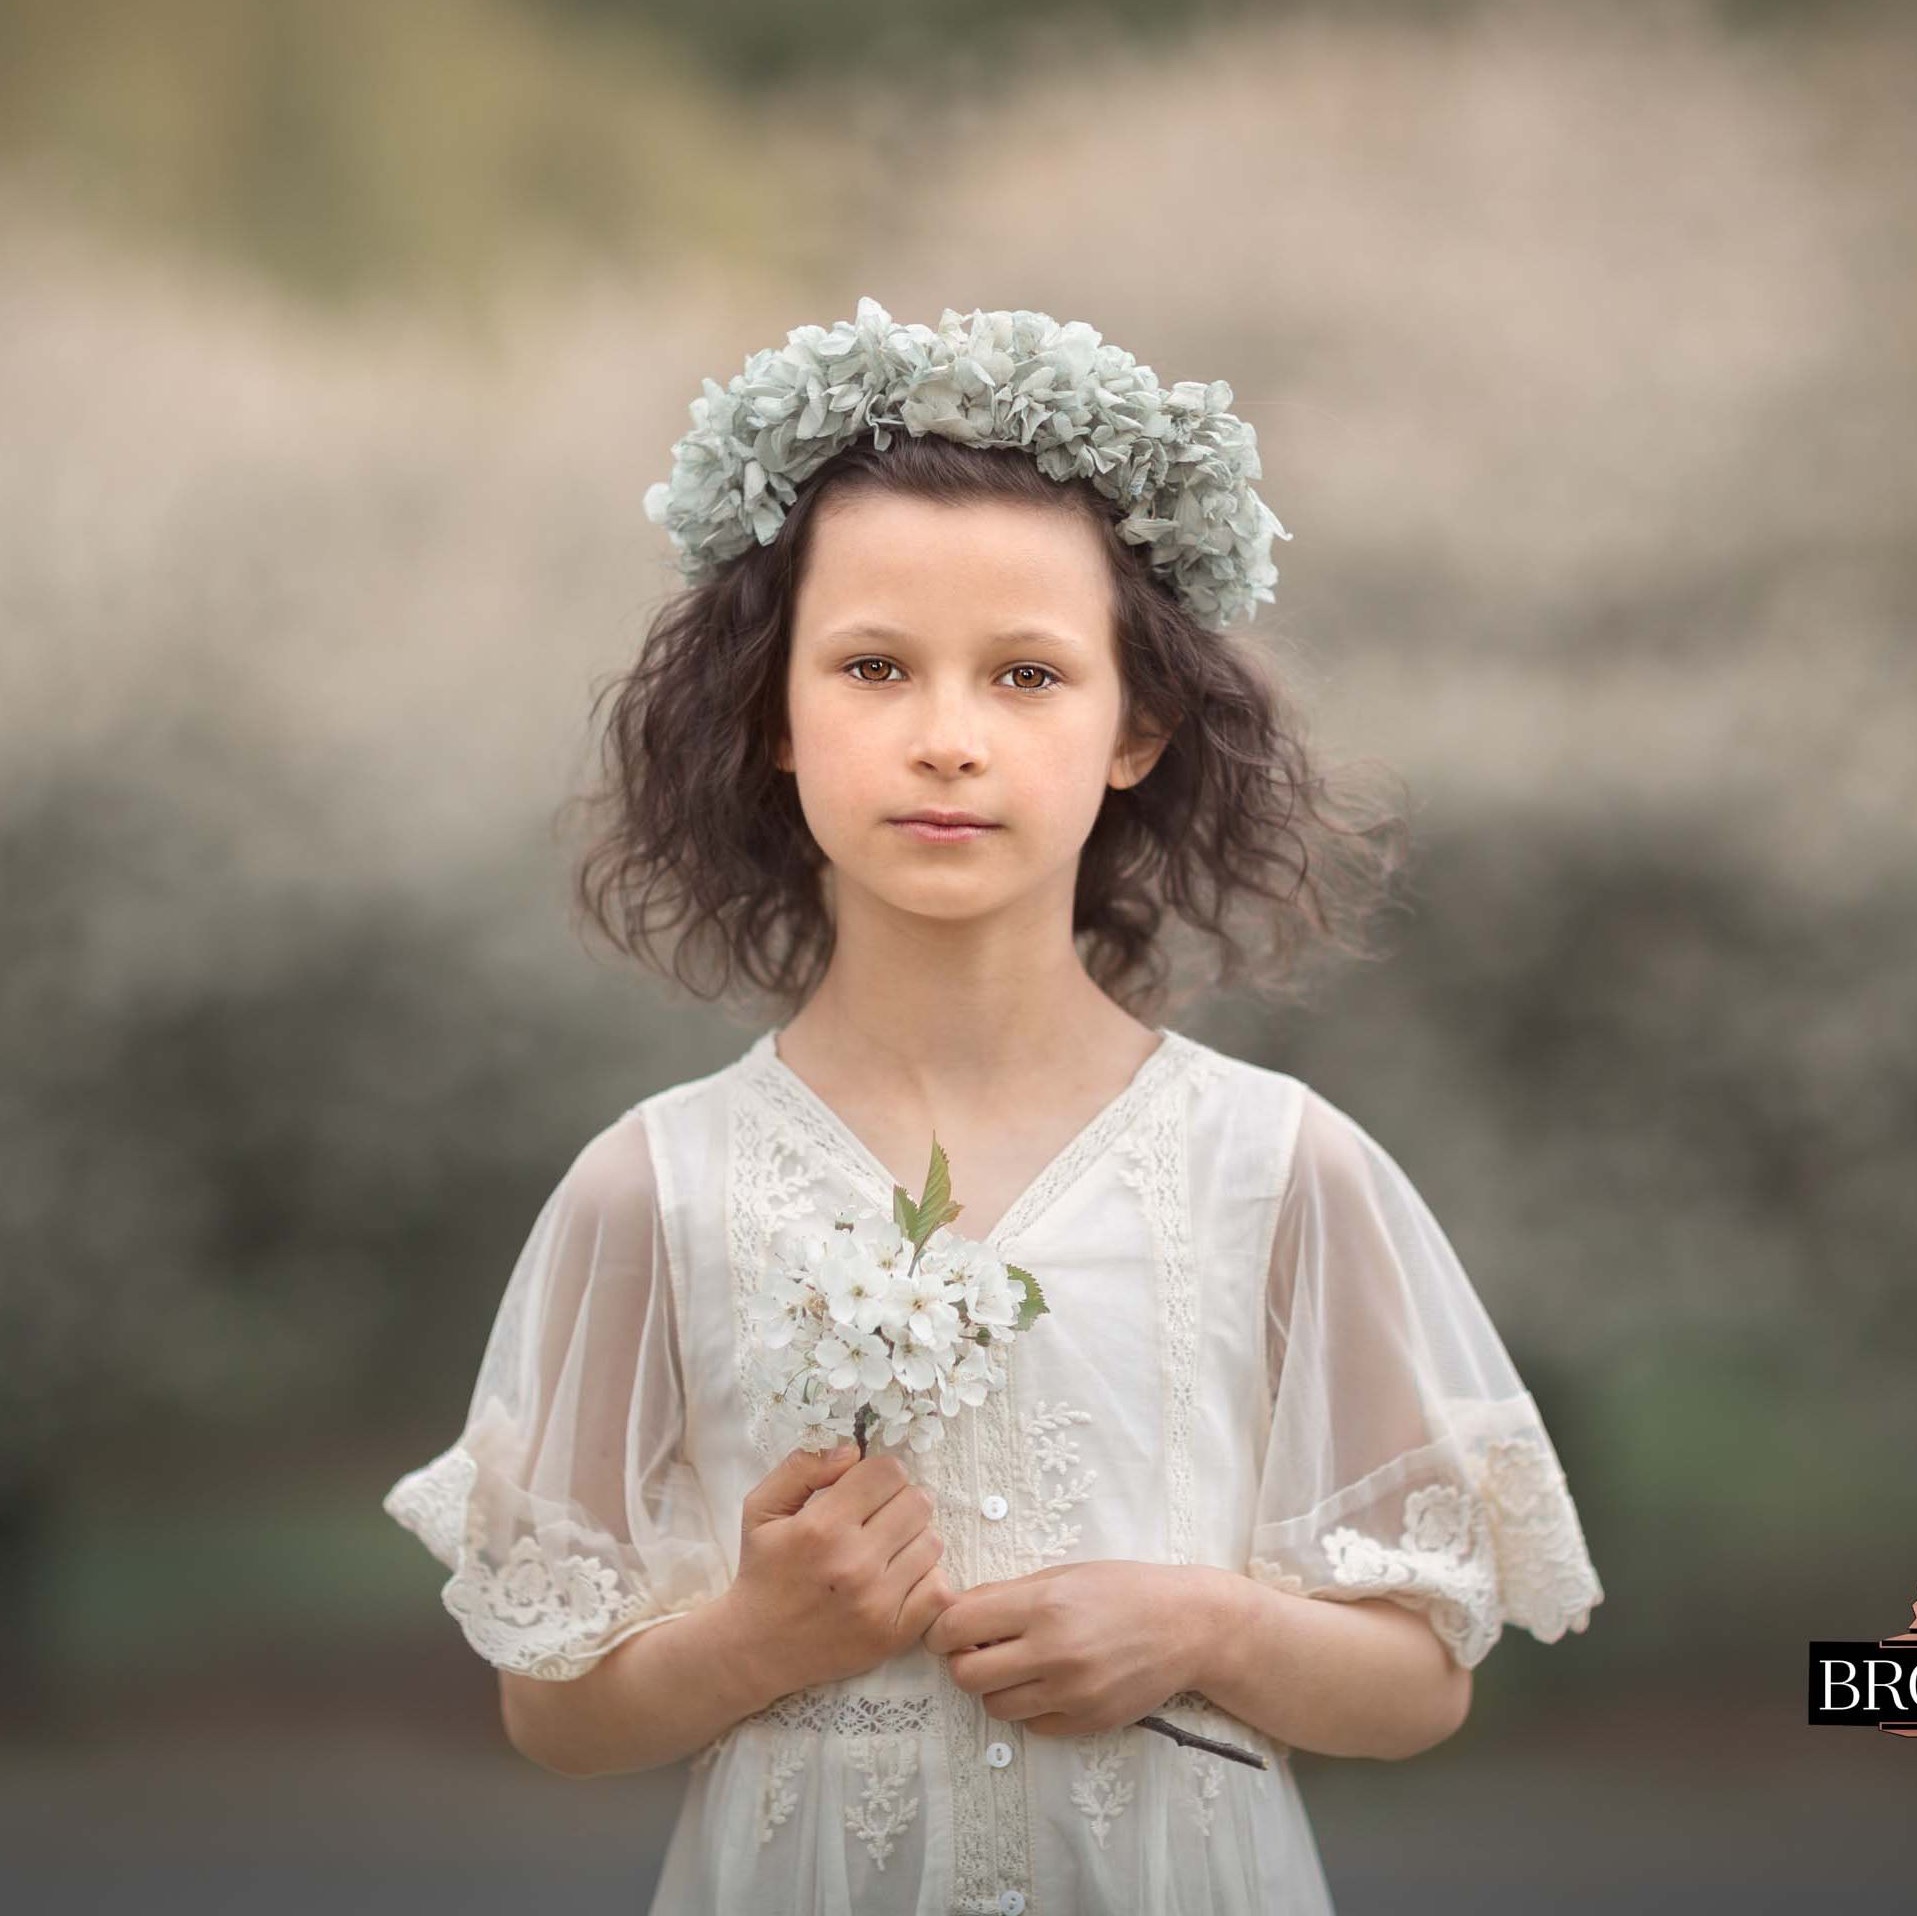 Jente i hvit kjole holder blomster